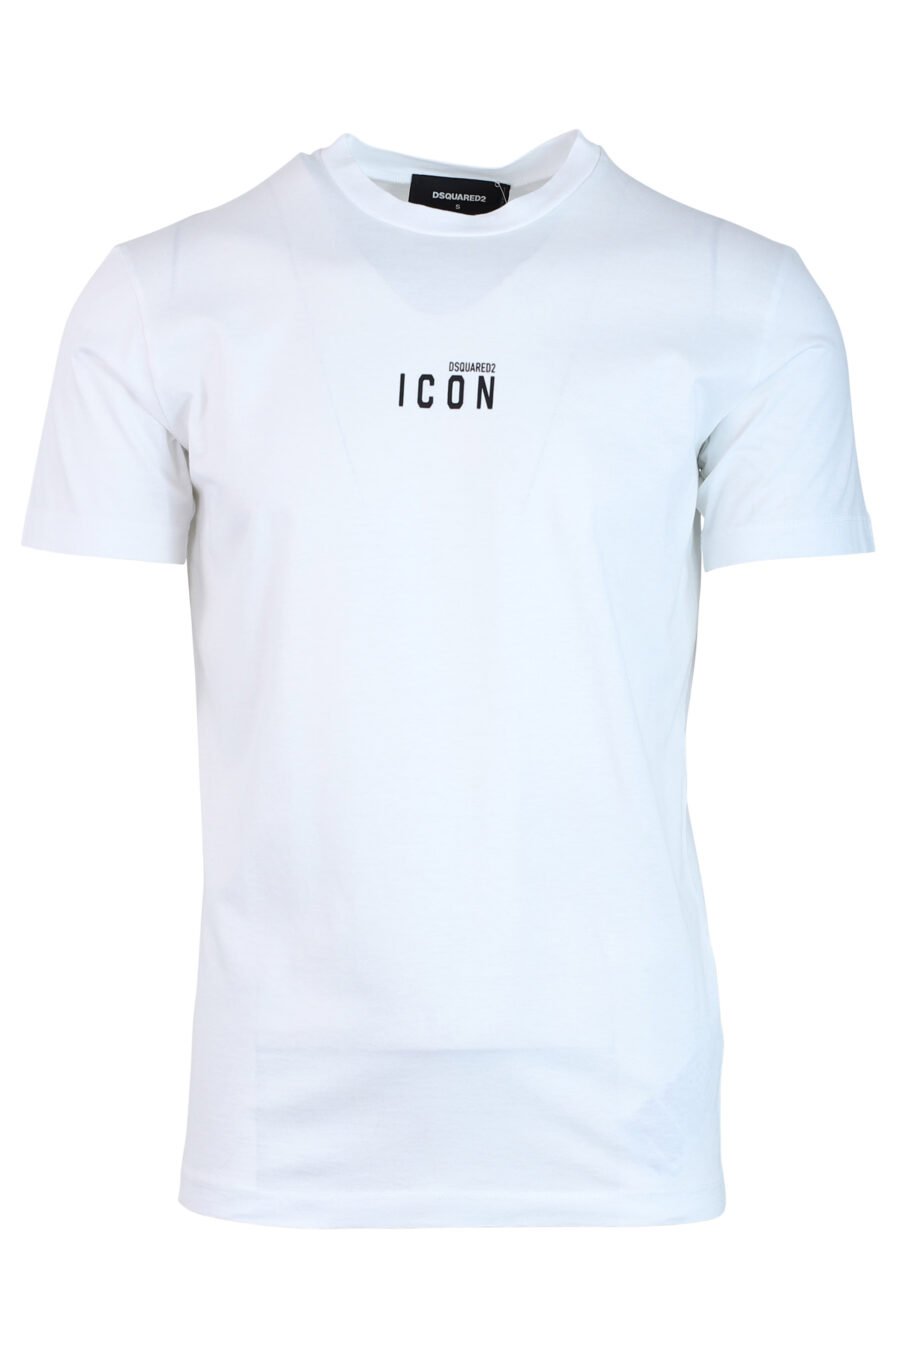 Weißes T-Shirt mit Minilogo "Icon" - IMG 0719